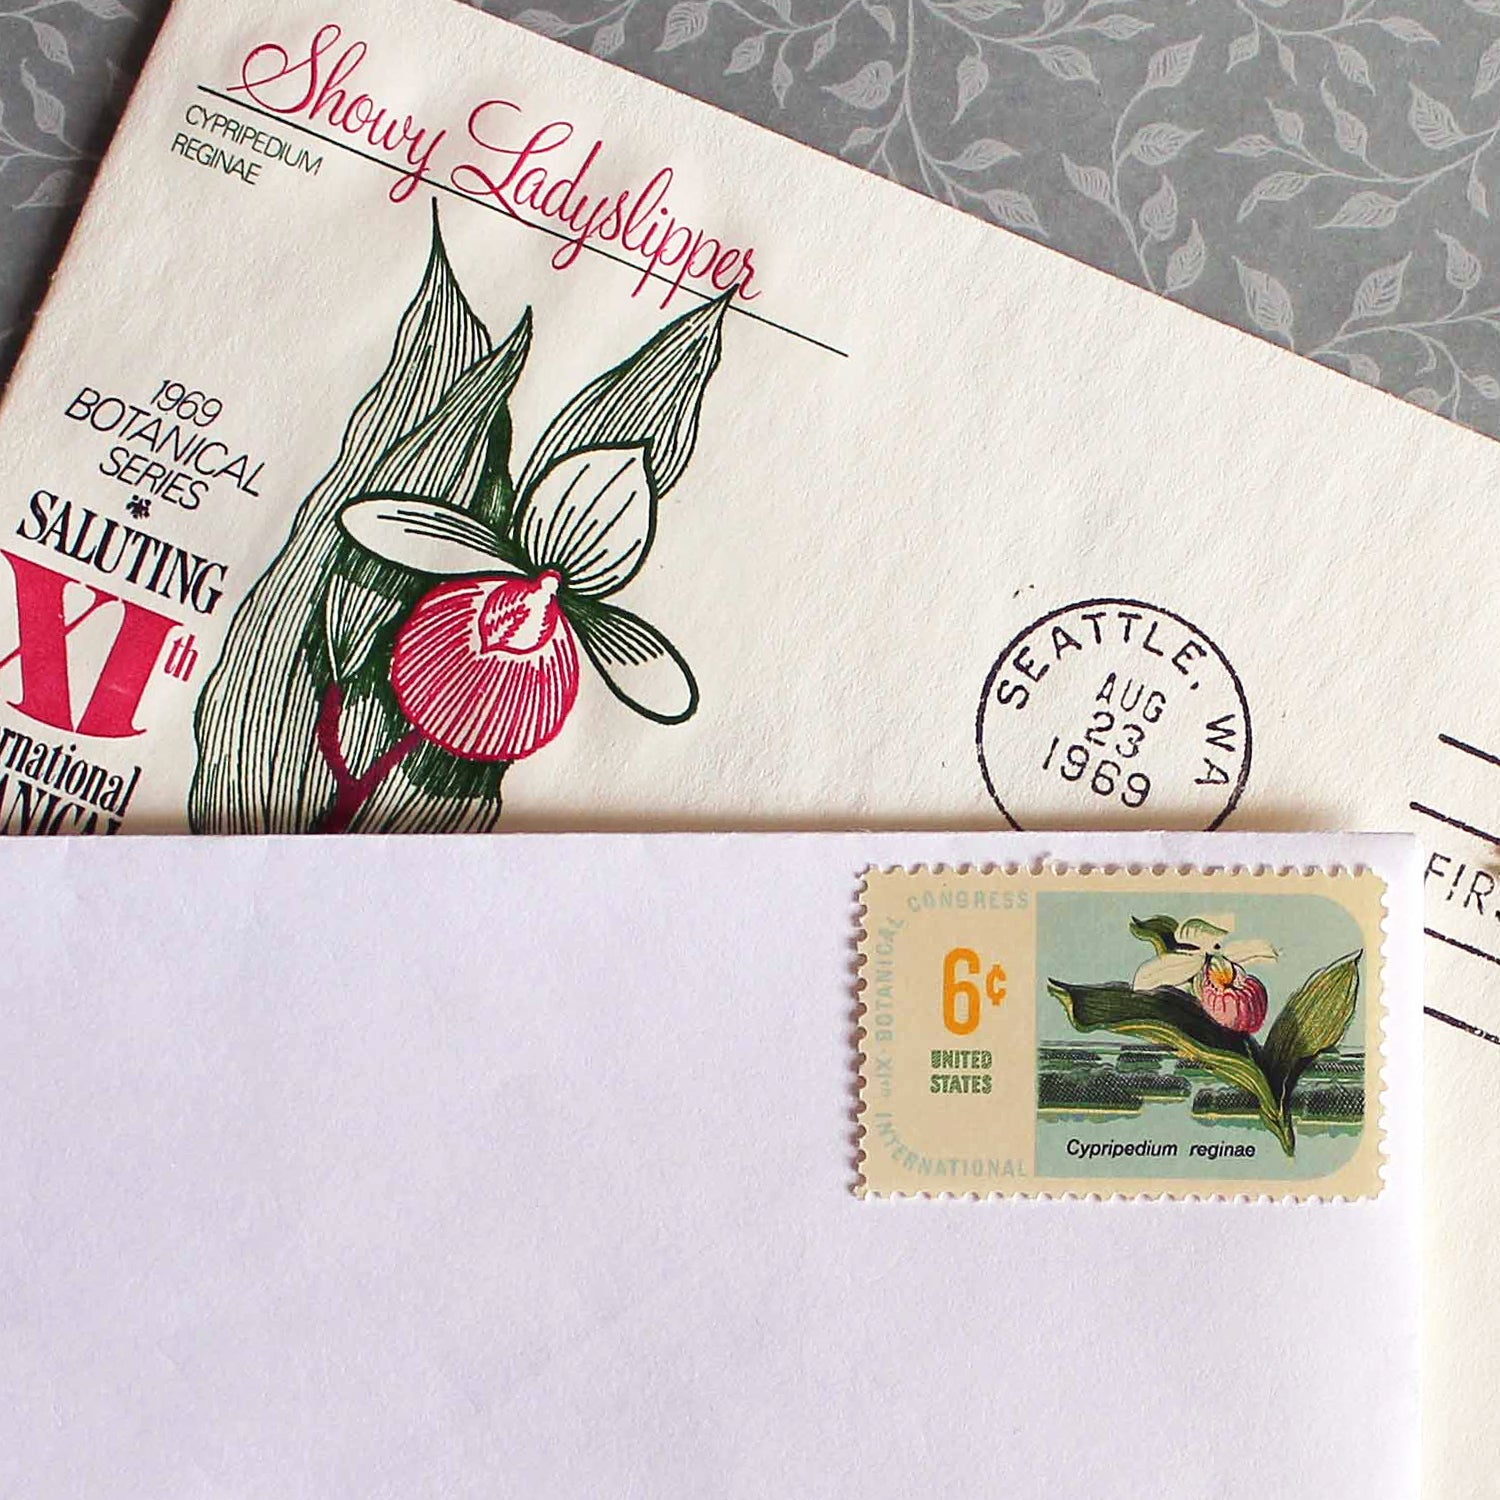 6c Ladyslipper Stamps .. Vintage Unused US Postage Stamps .. Pack